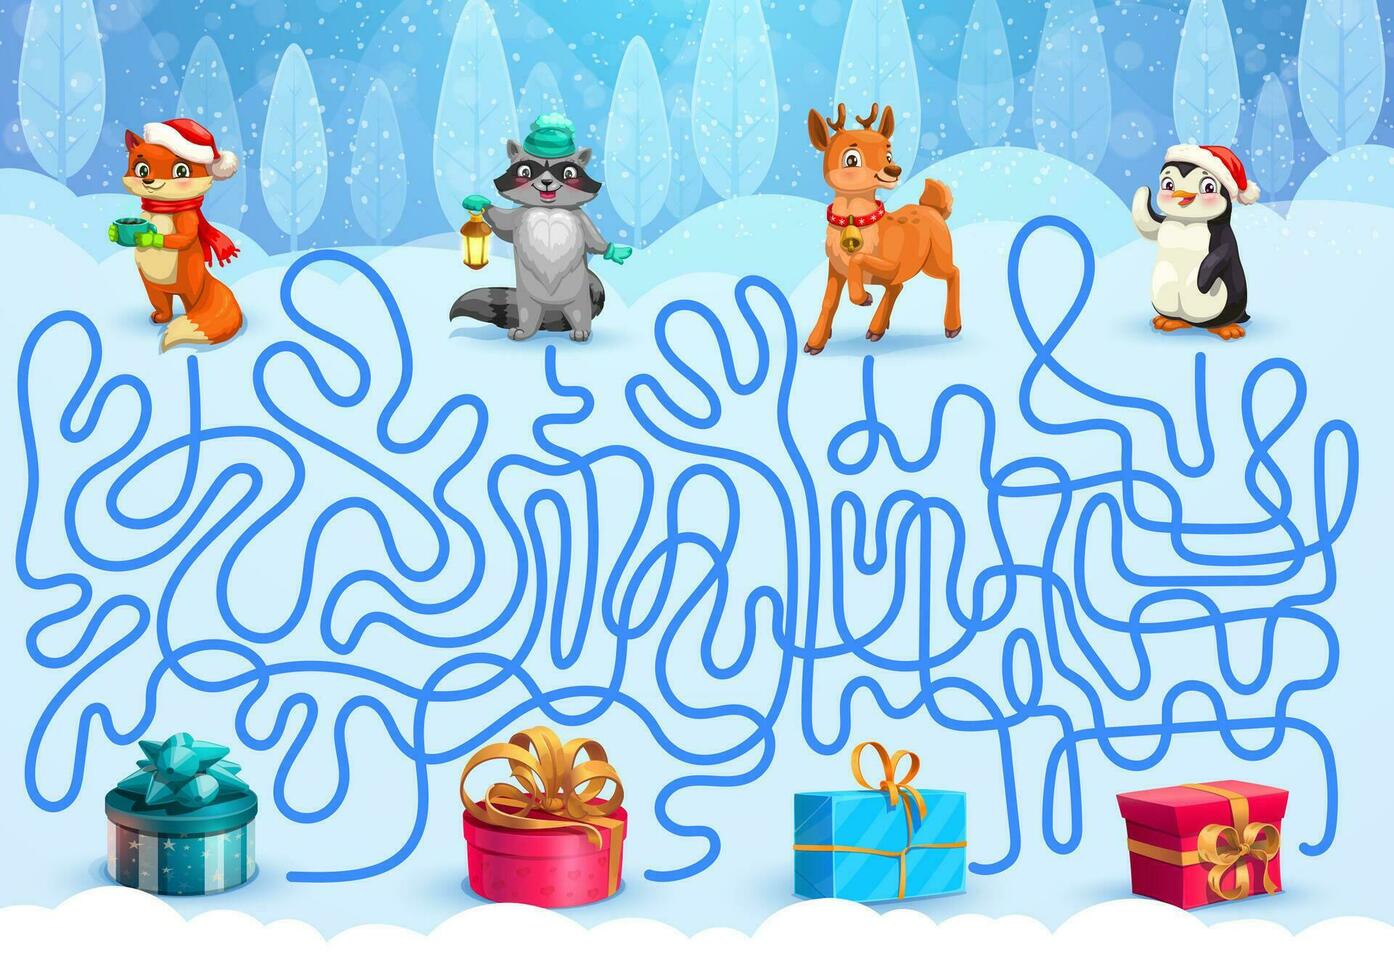 Christmas labyrinth maze maze with cartoon animals vector